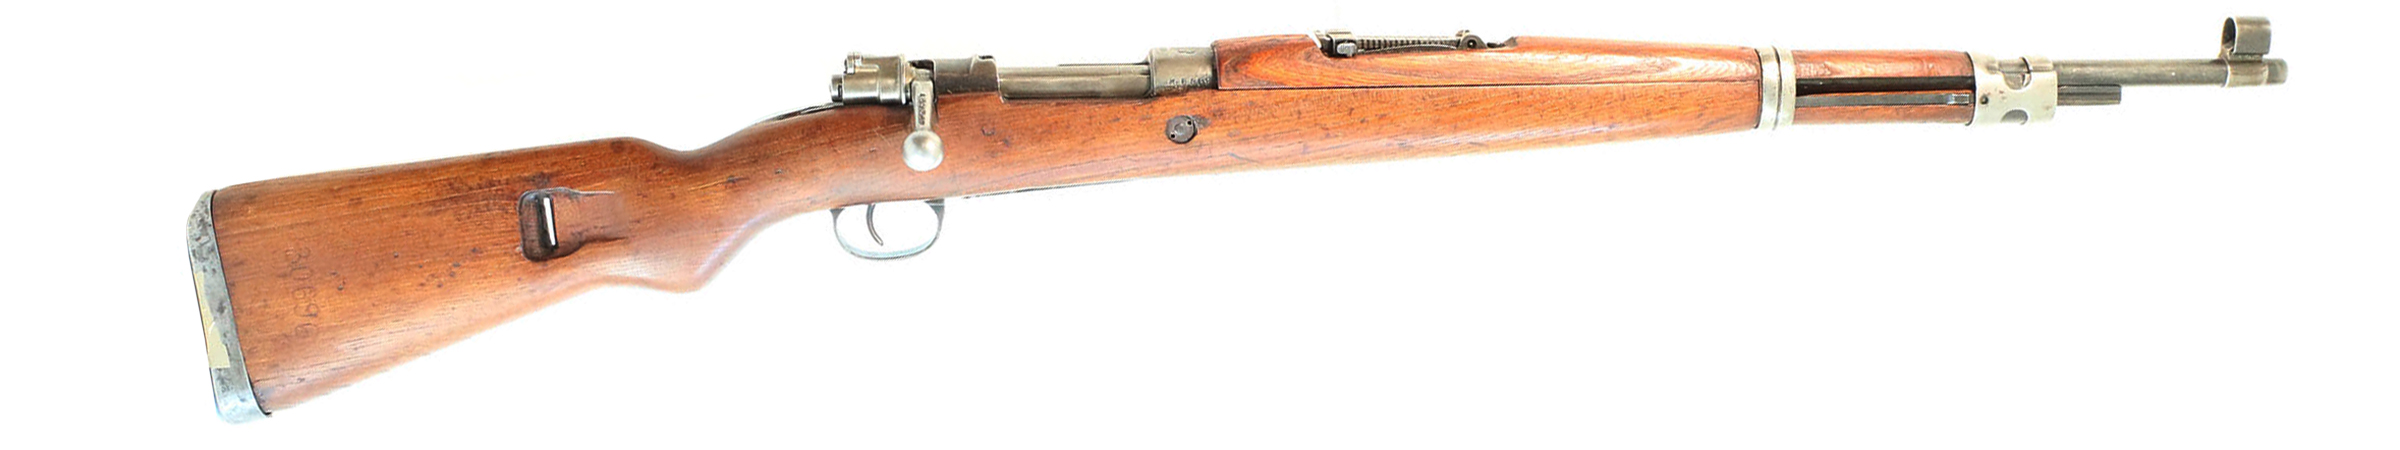 Yugoslavian Mauser M48